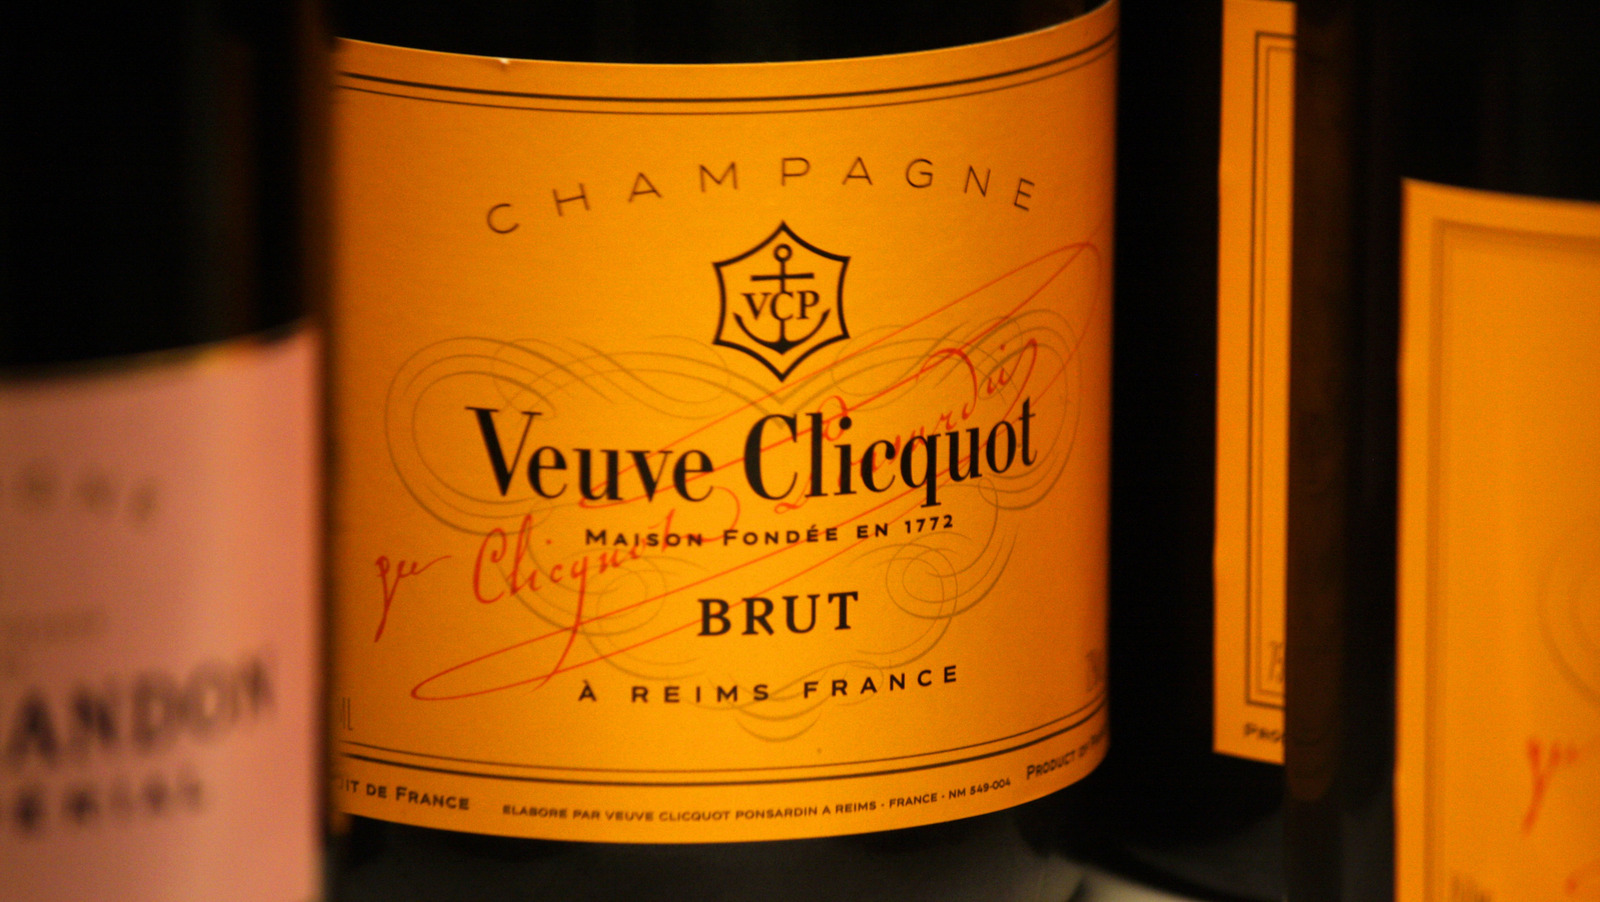 Veuve Clicquot Brut Champagne Yellow Label - City Center Wines